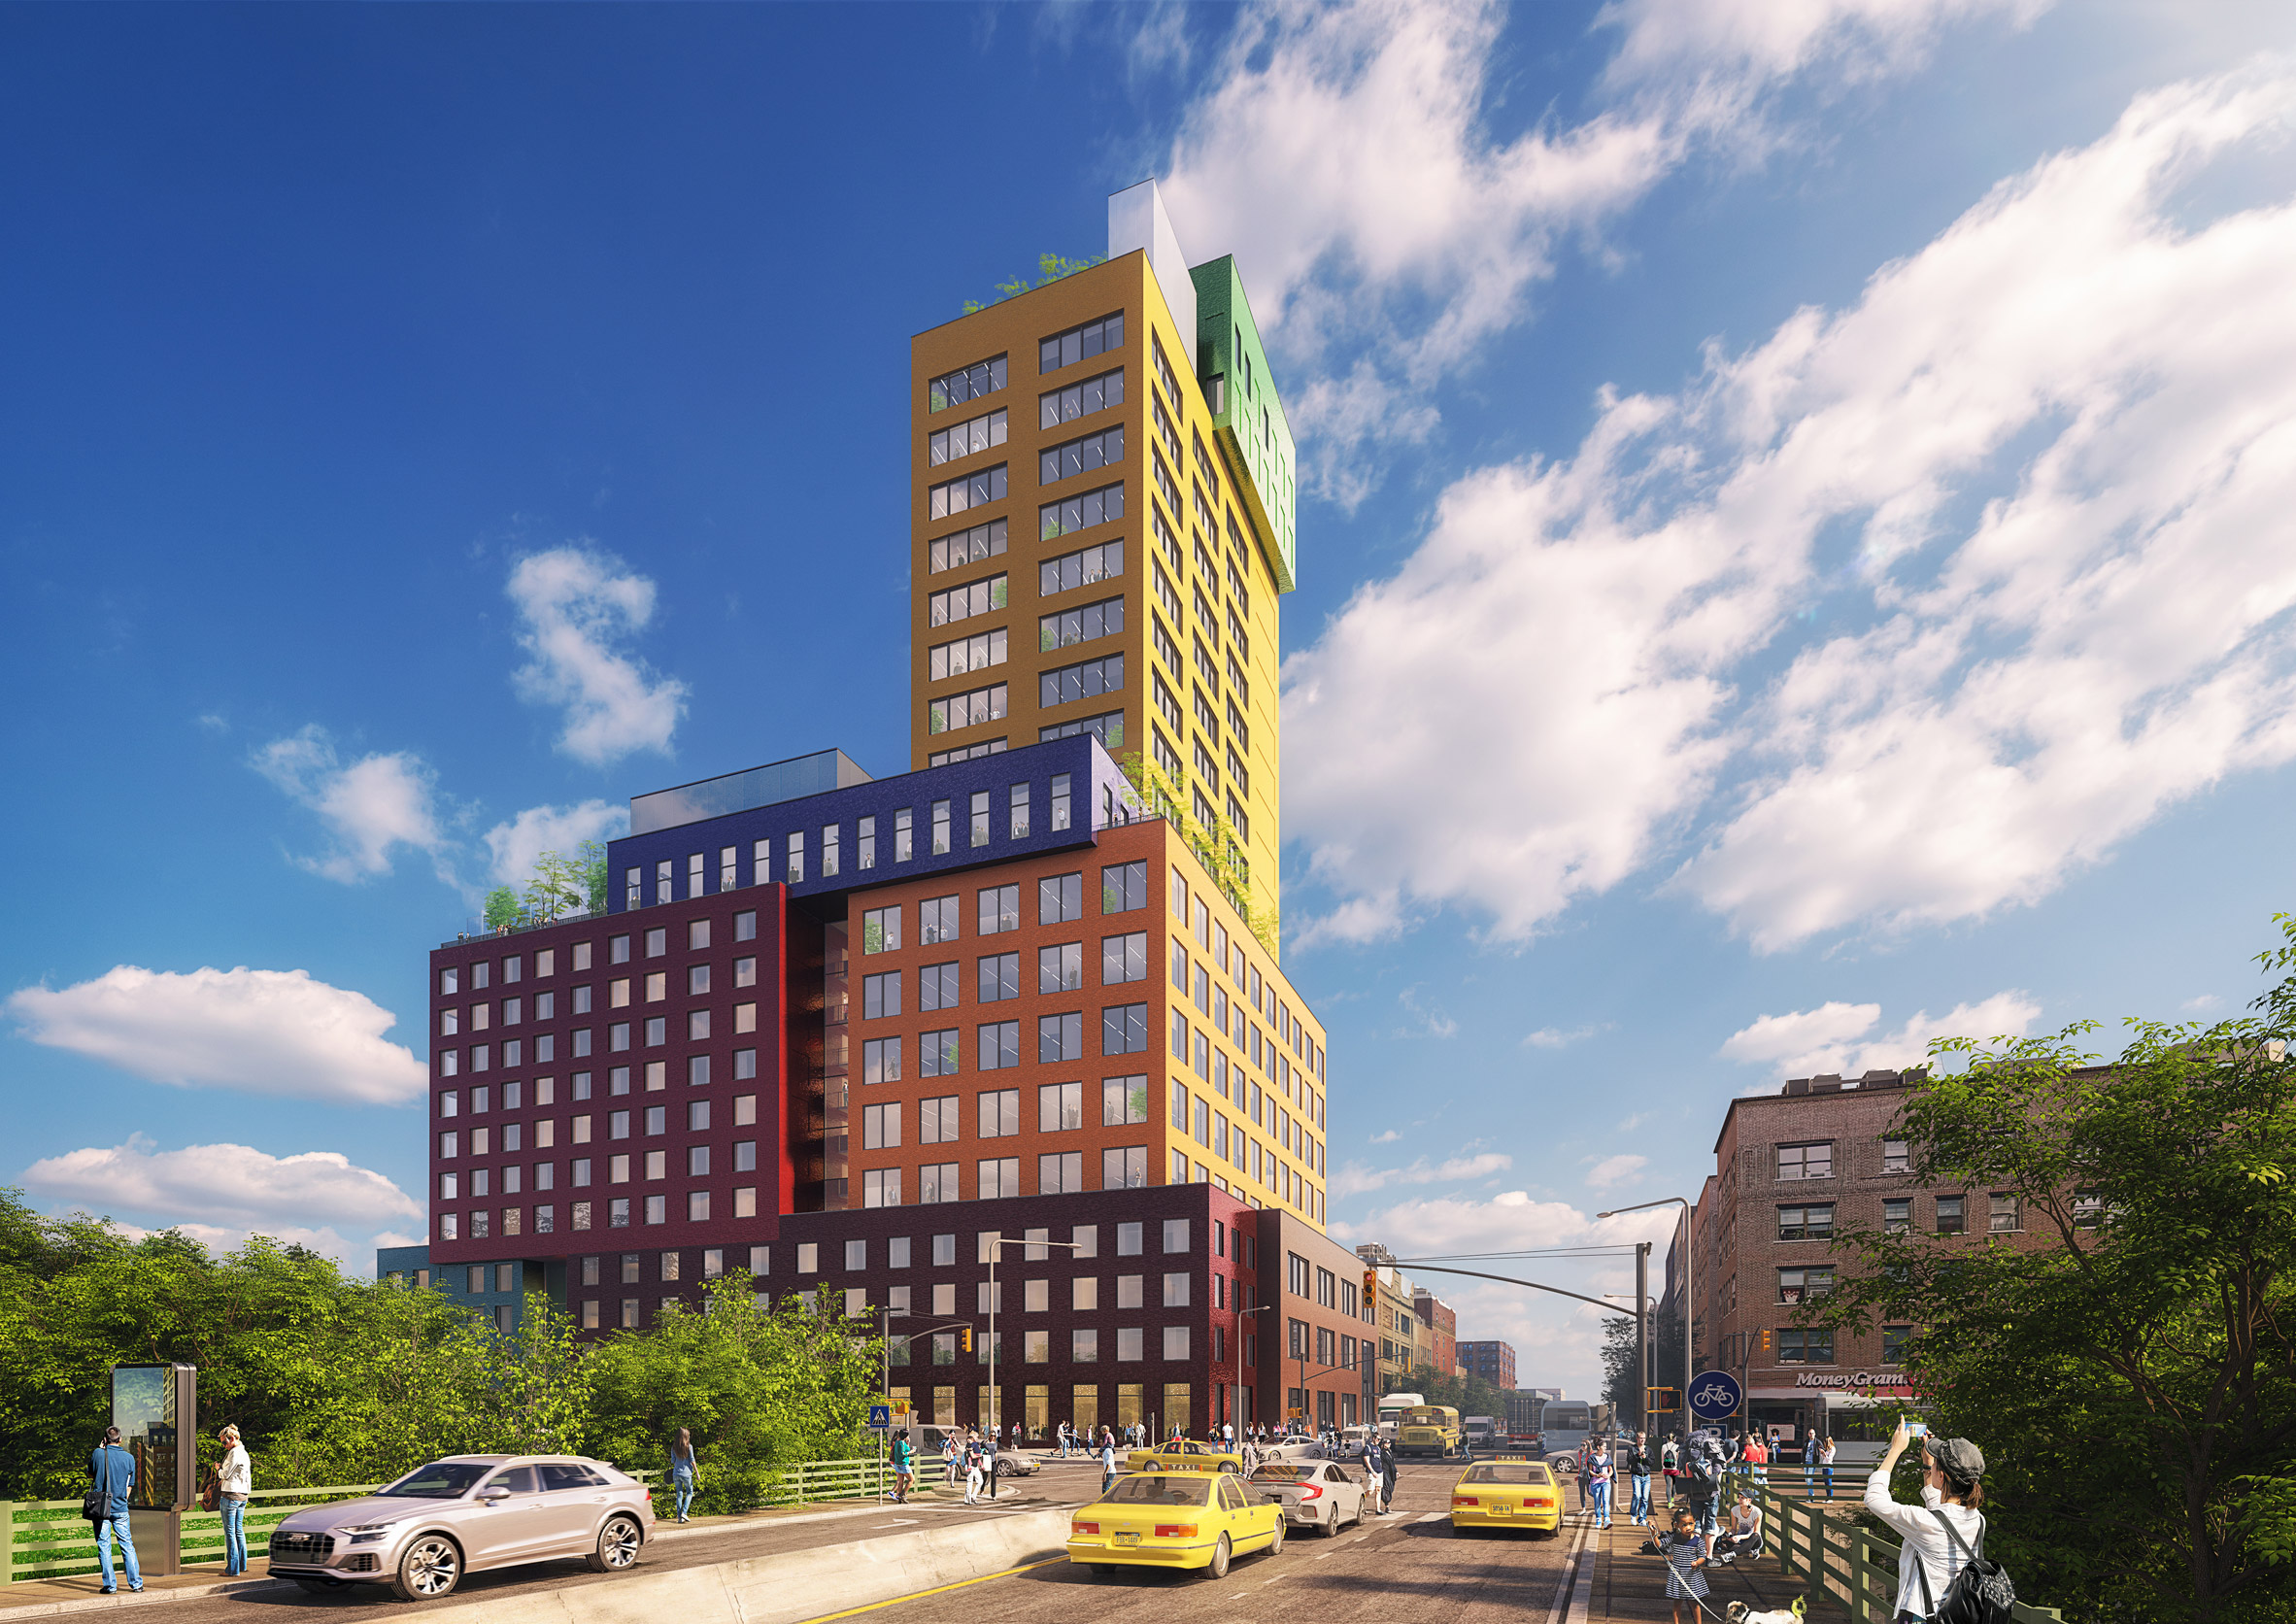 MVRDV's Radio Tower & Hotel for New York constitutes colourful Lego-like blocks